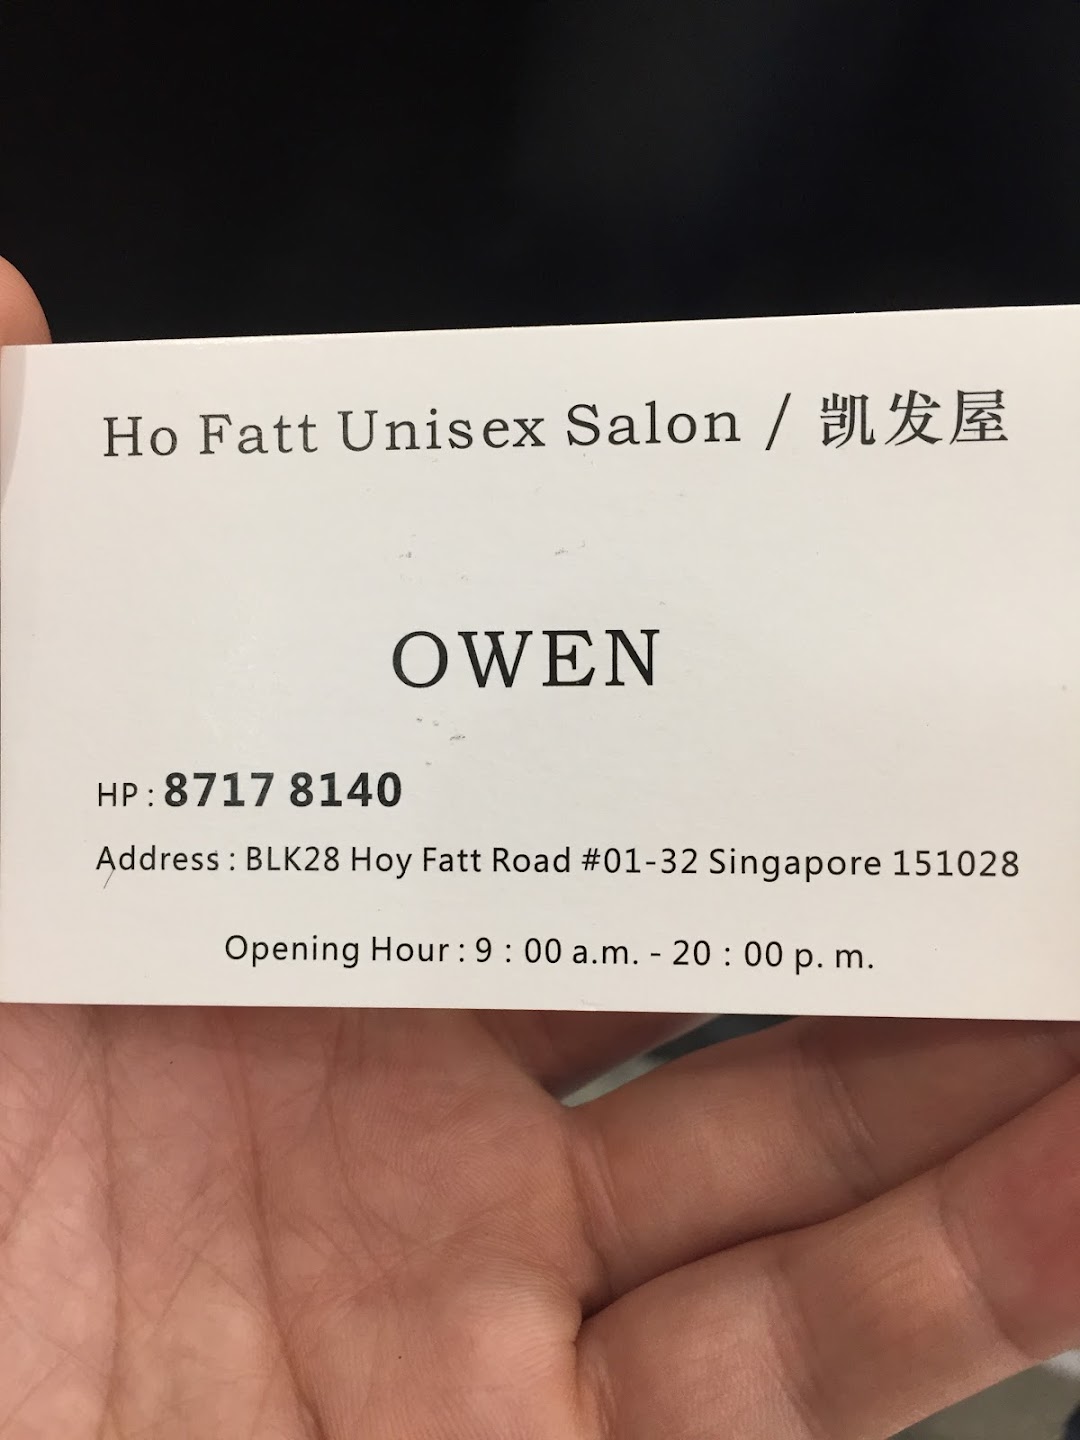 Owen salon